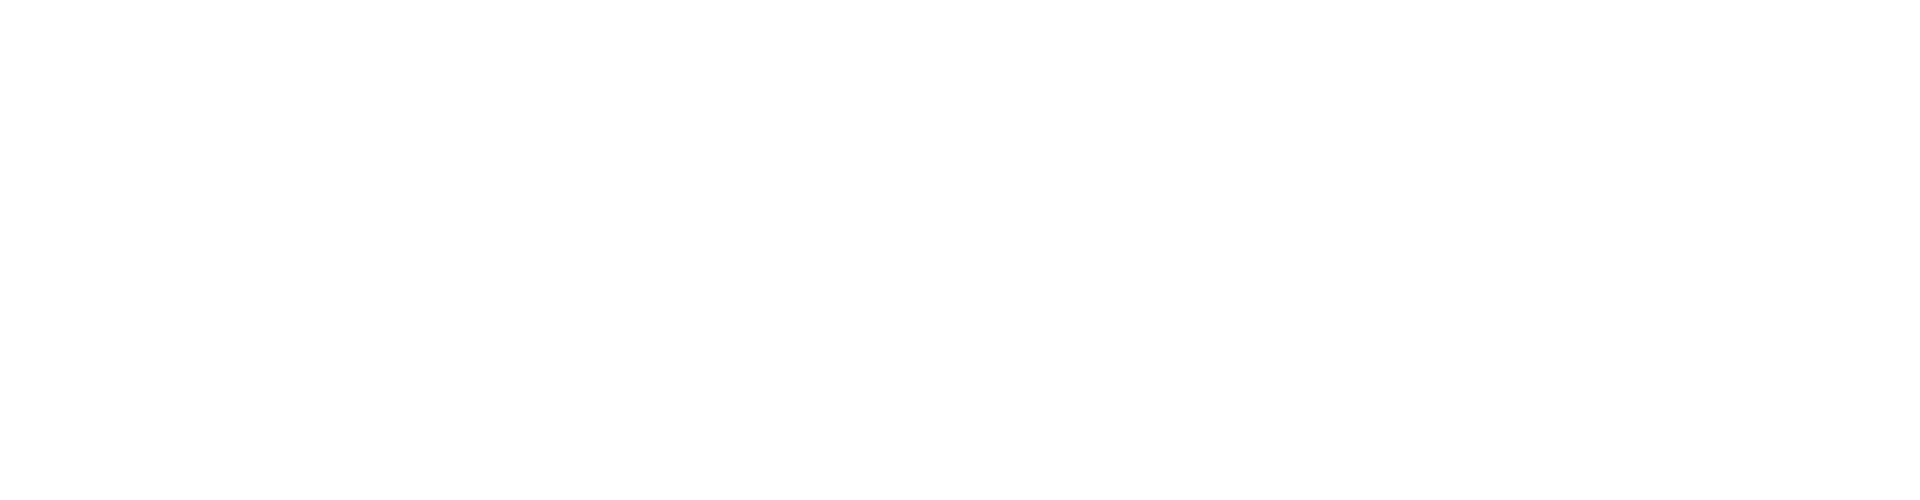 INVRTUAL - Your VR presentation tool